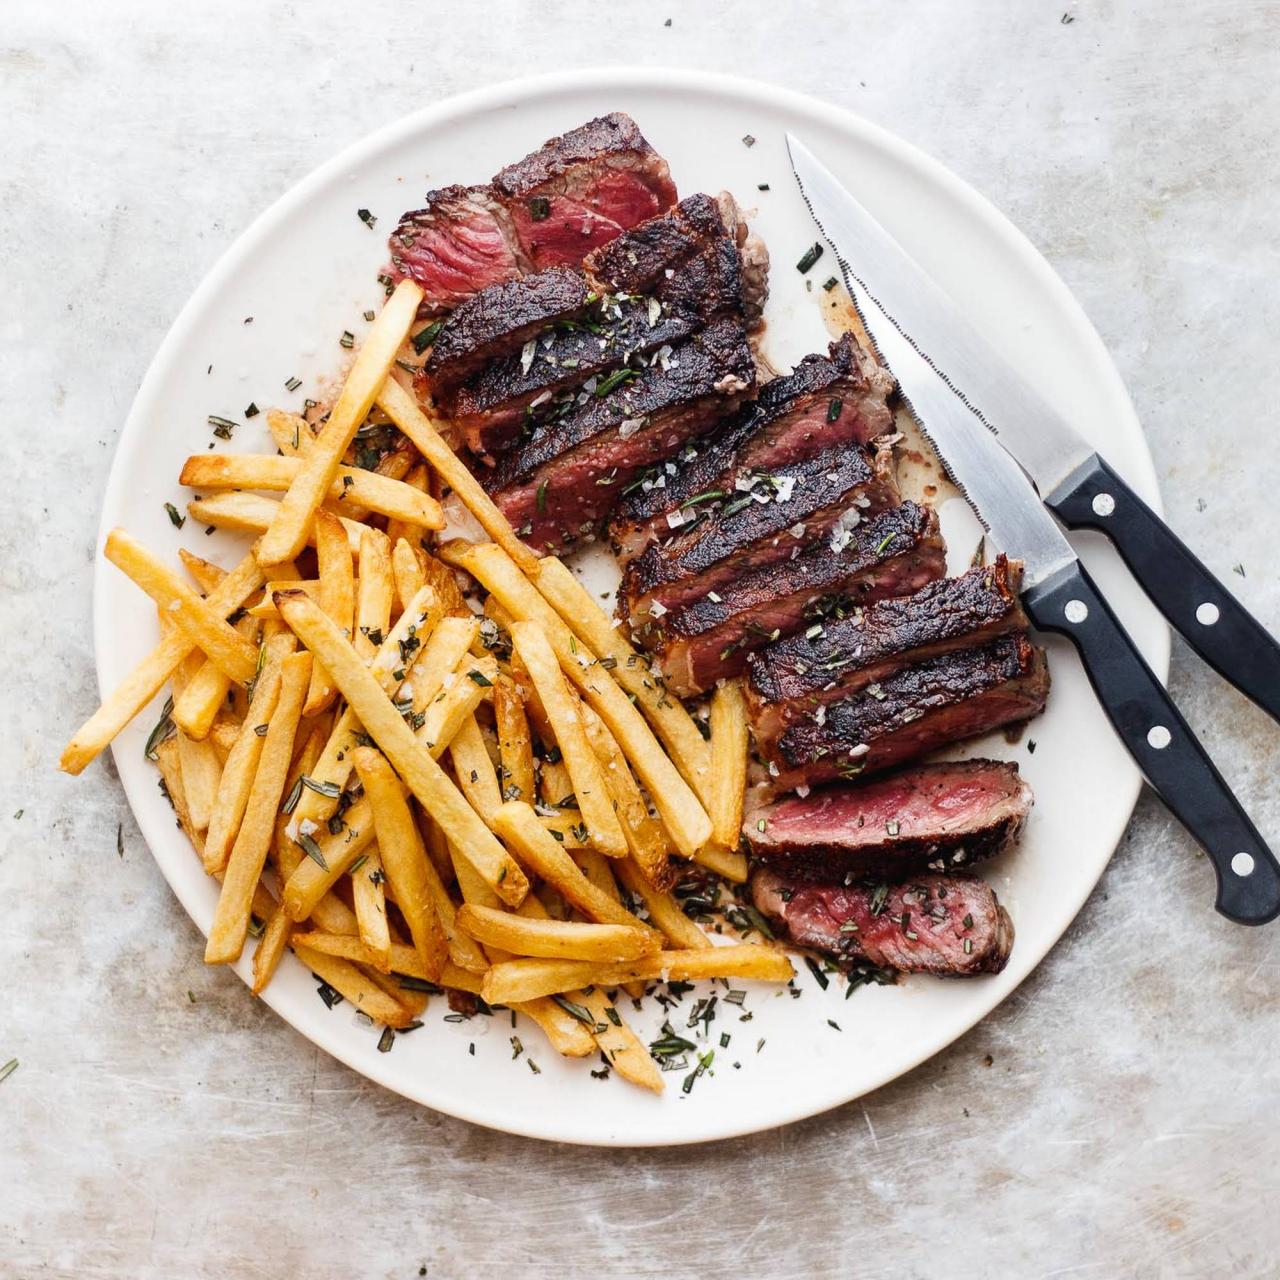 10 Best Baked New York Strip Steak Recipes | Yummly